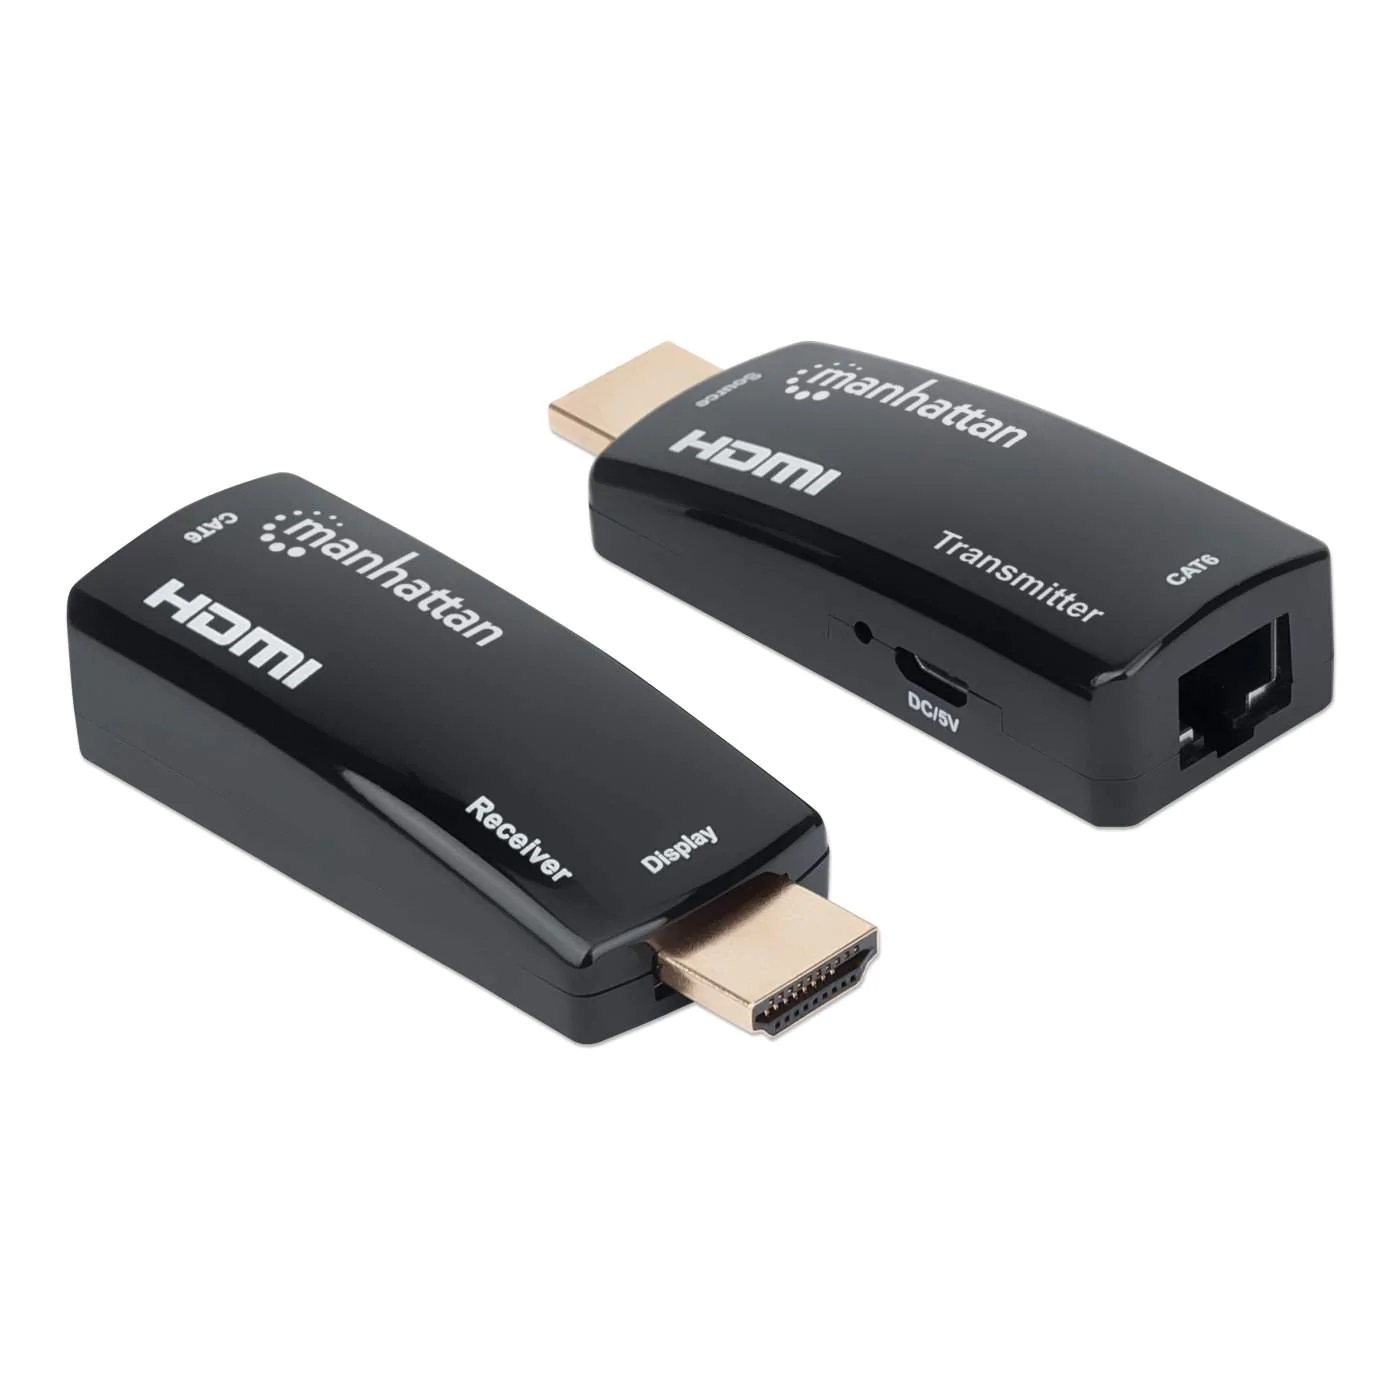 207539 Kit Extensor compacto de HDMI sobre Ethernet. Extiende una señal HDMI hasta 60 m usando un cable Ethernet Cat6 -